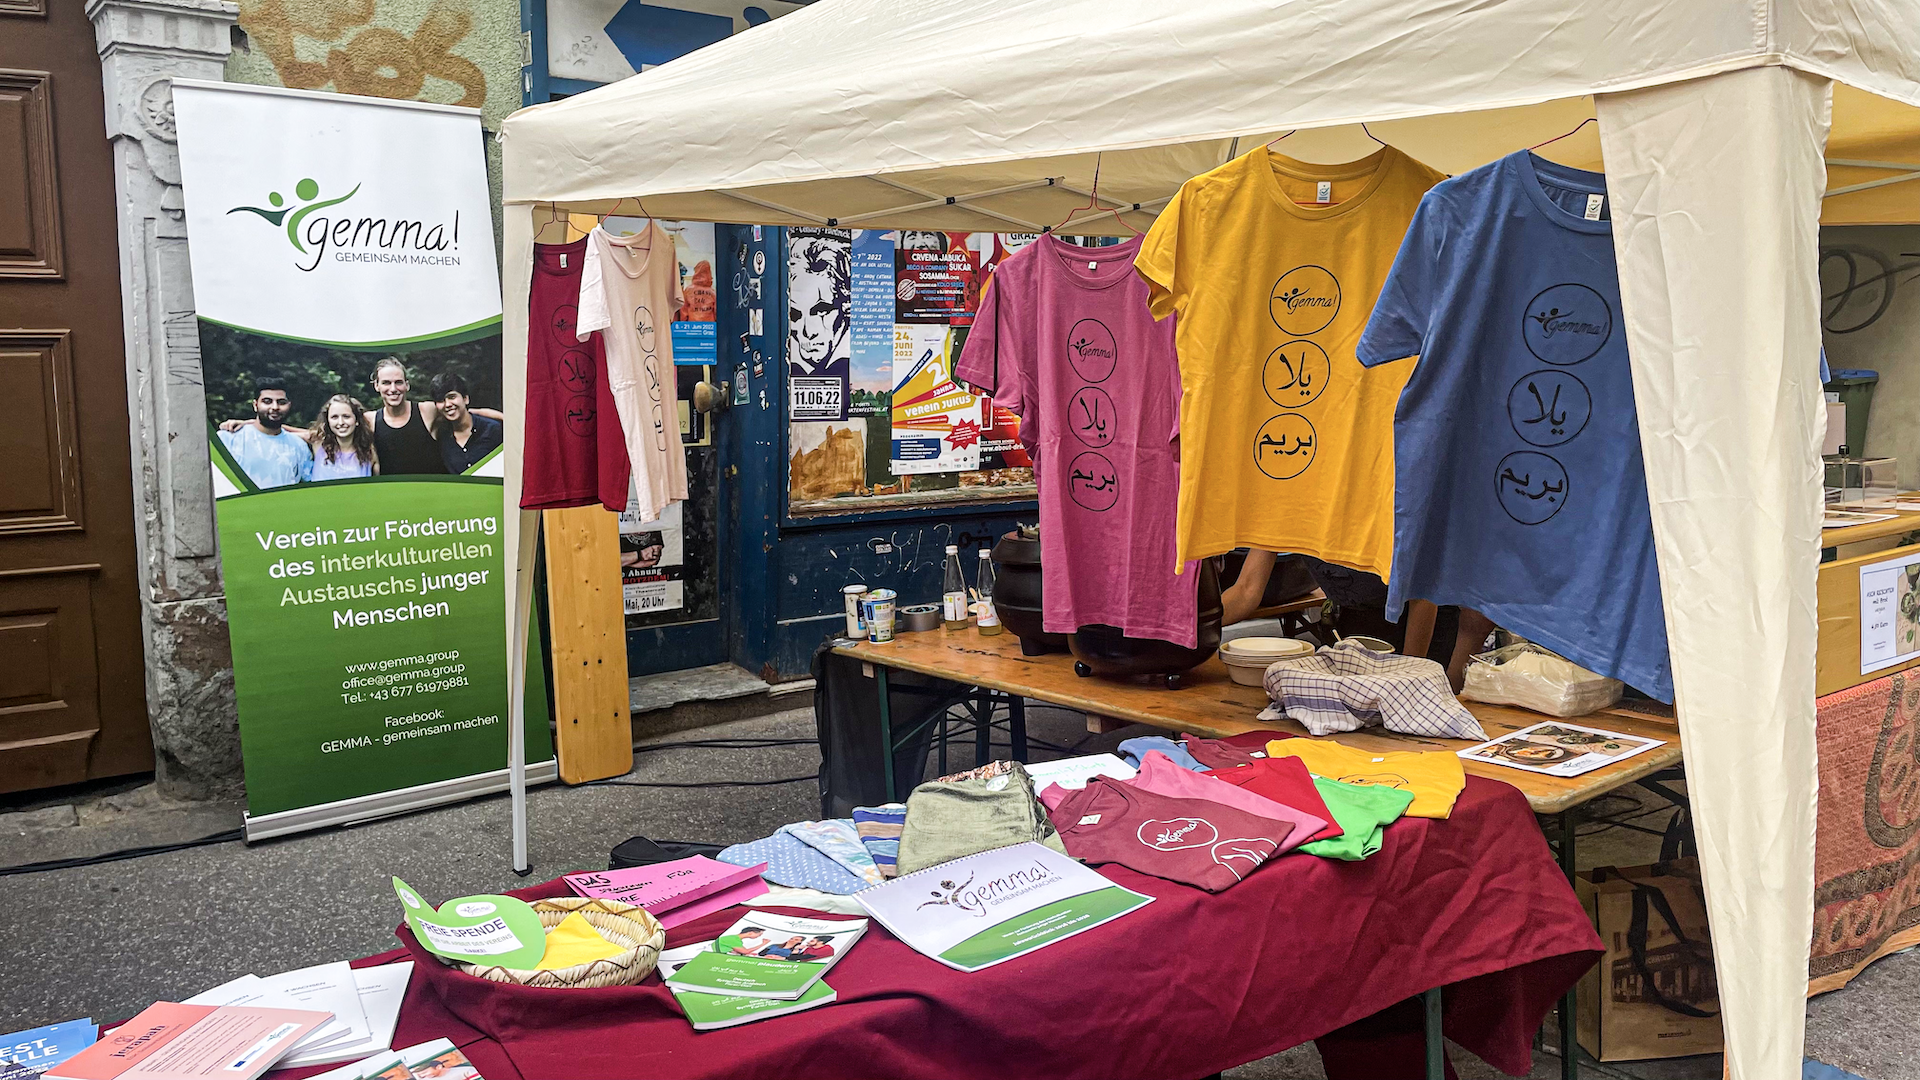 Gemma! fördert auch am Street-Food Market den interkulturellen Austausch und verkauft T-Shirts. - Foto: Eva Riener